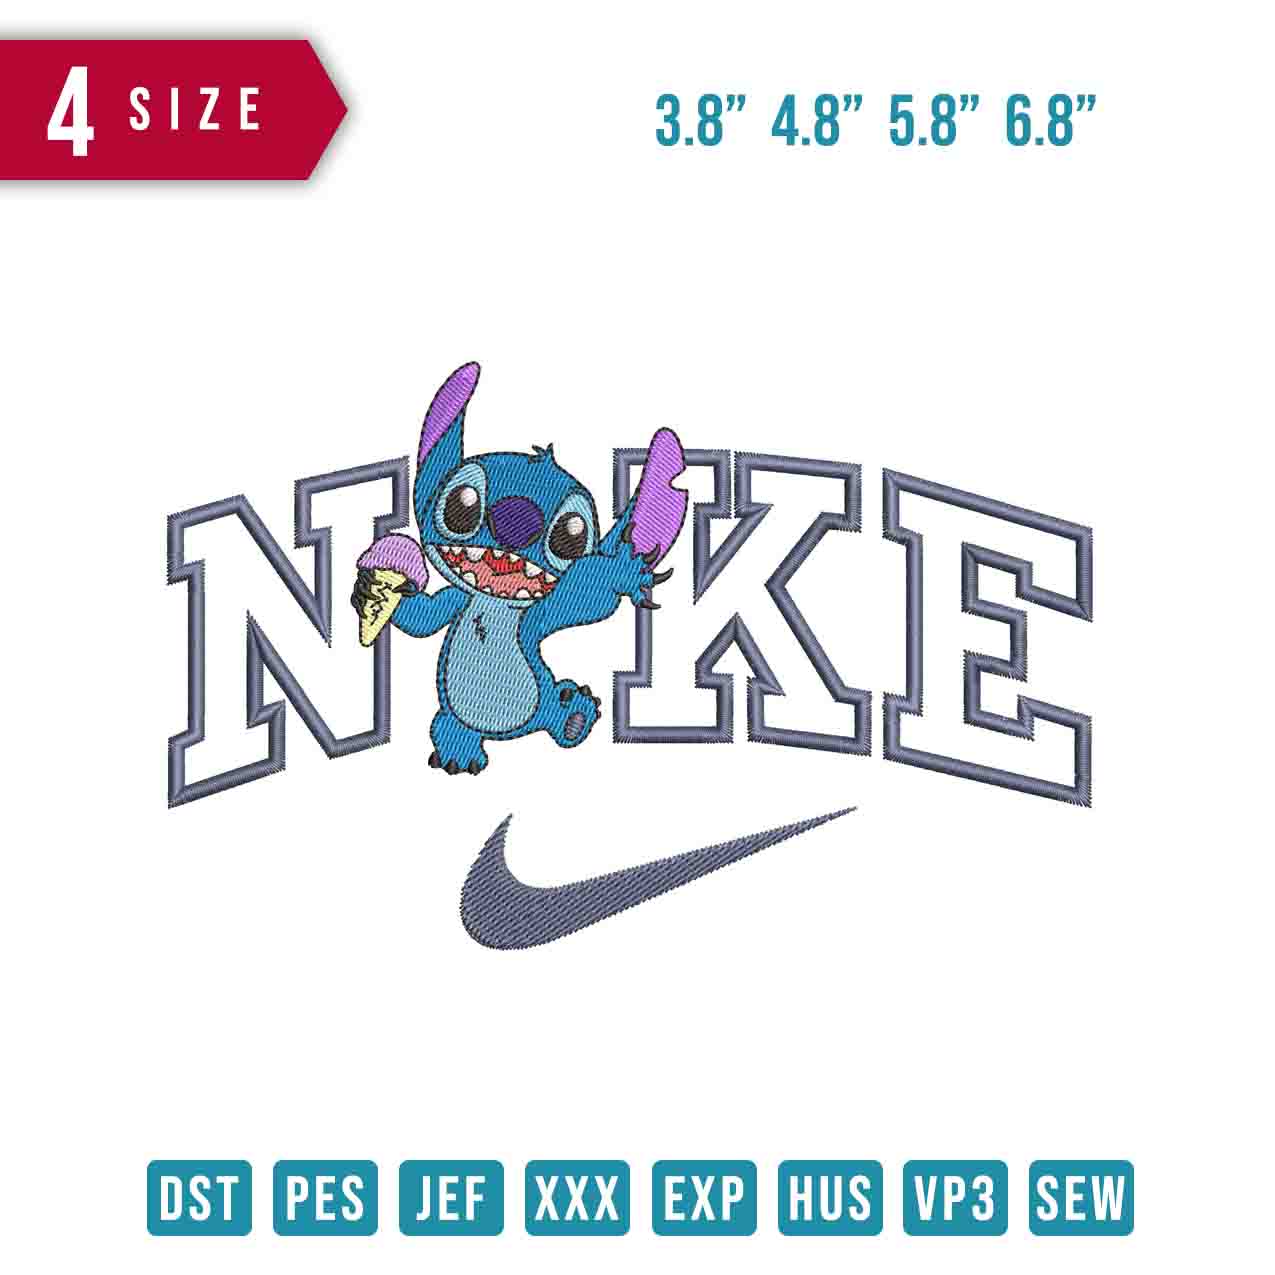 Nike Stitch mit Eiscreme